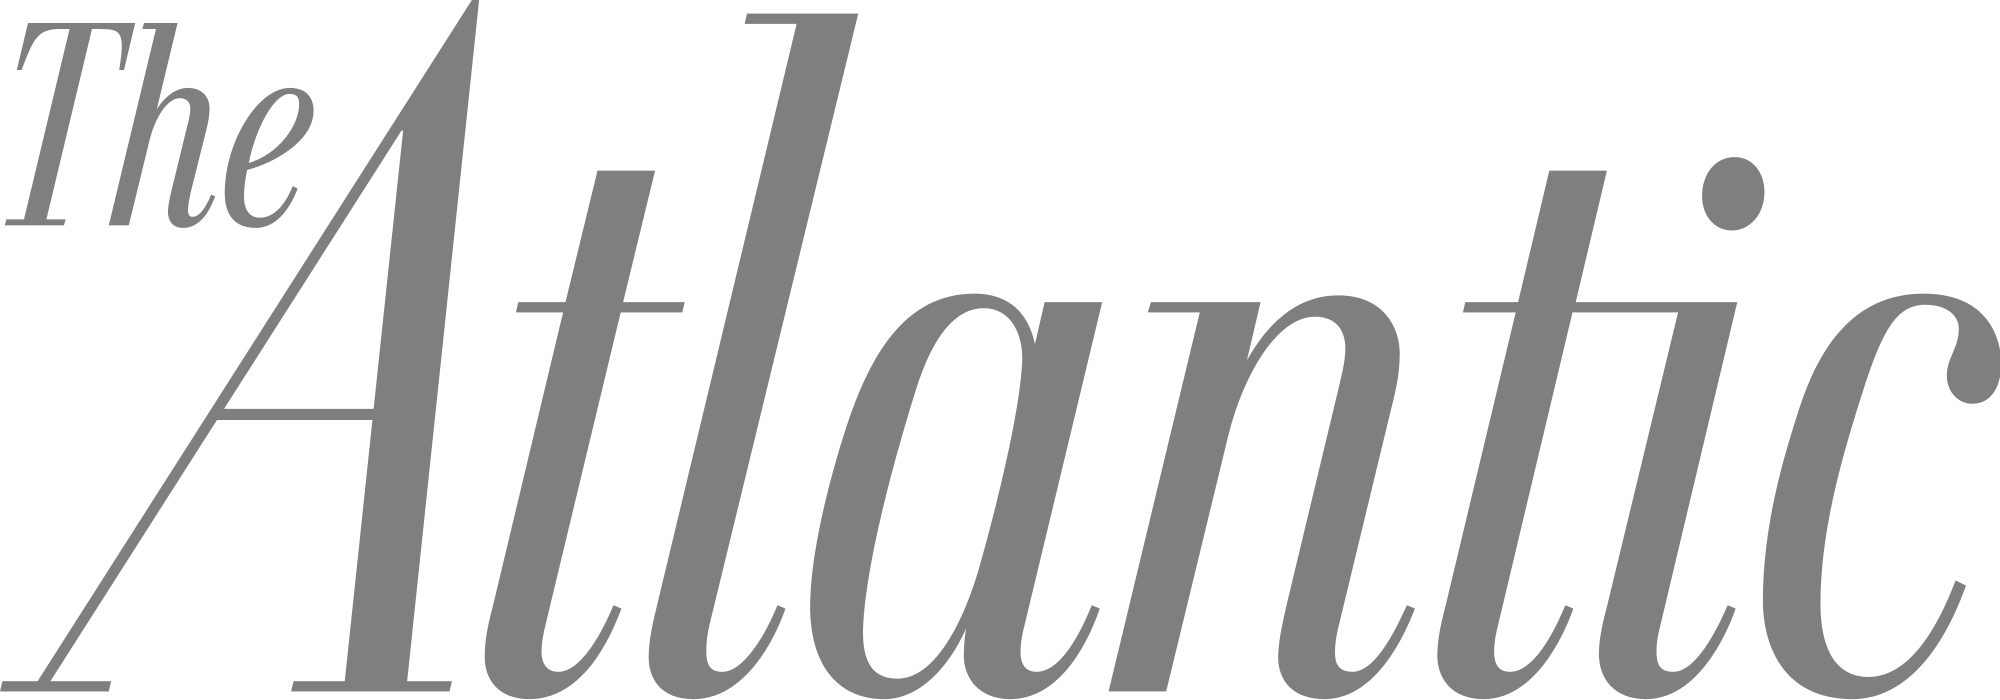 the-atlantic-logo-2